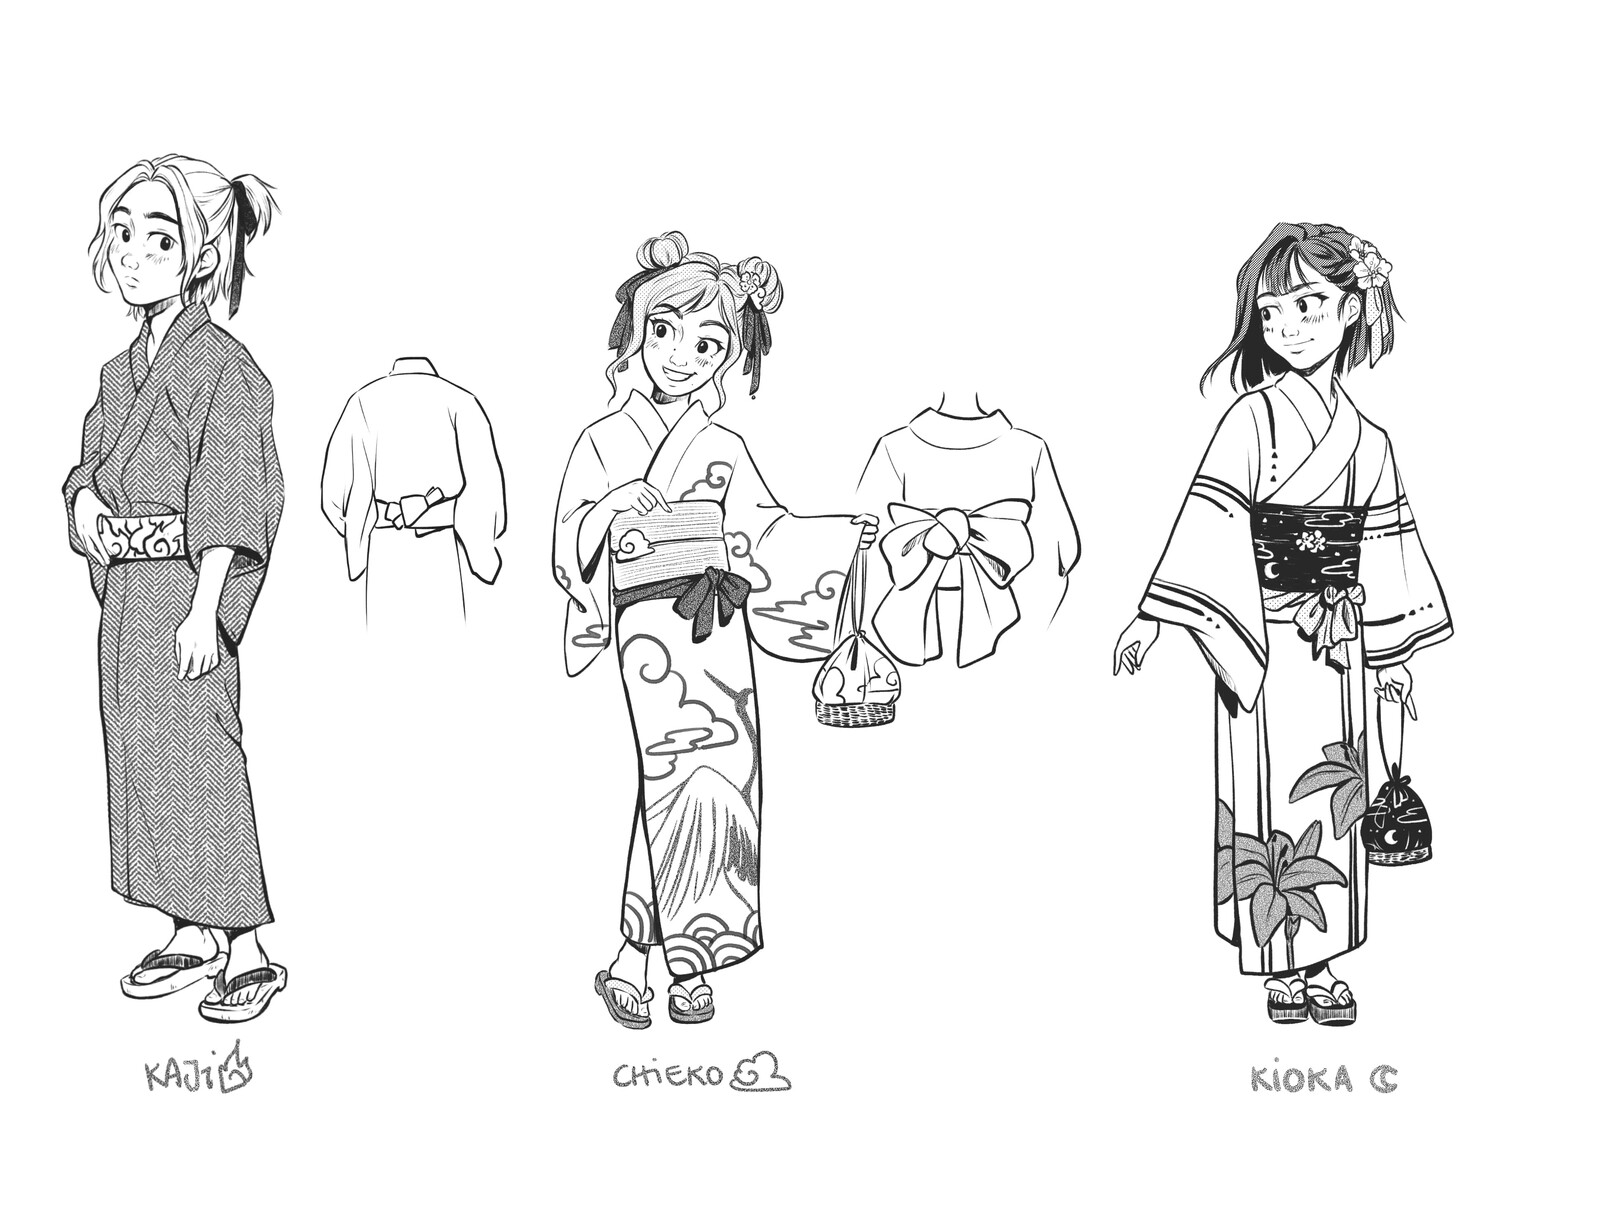 Character design for manga story "Kioka. La profecía al otro lado del espejo" part 1.